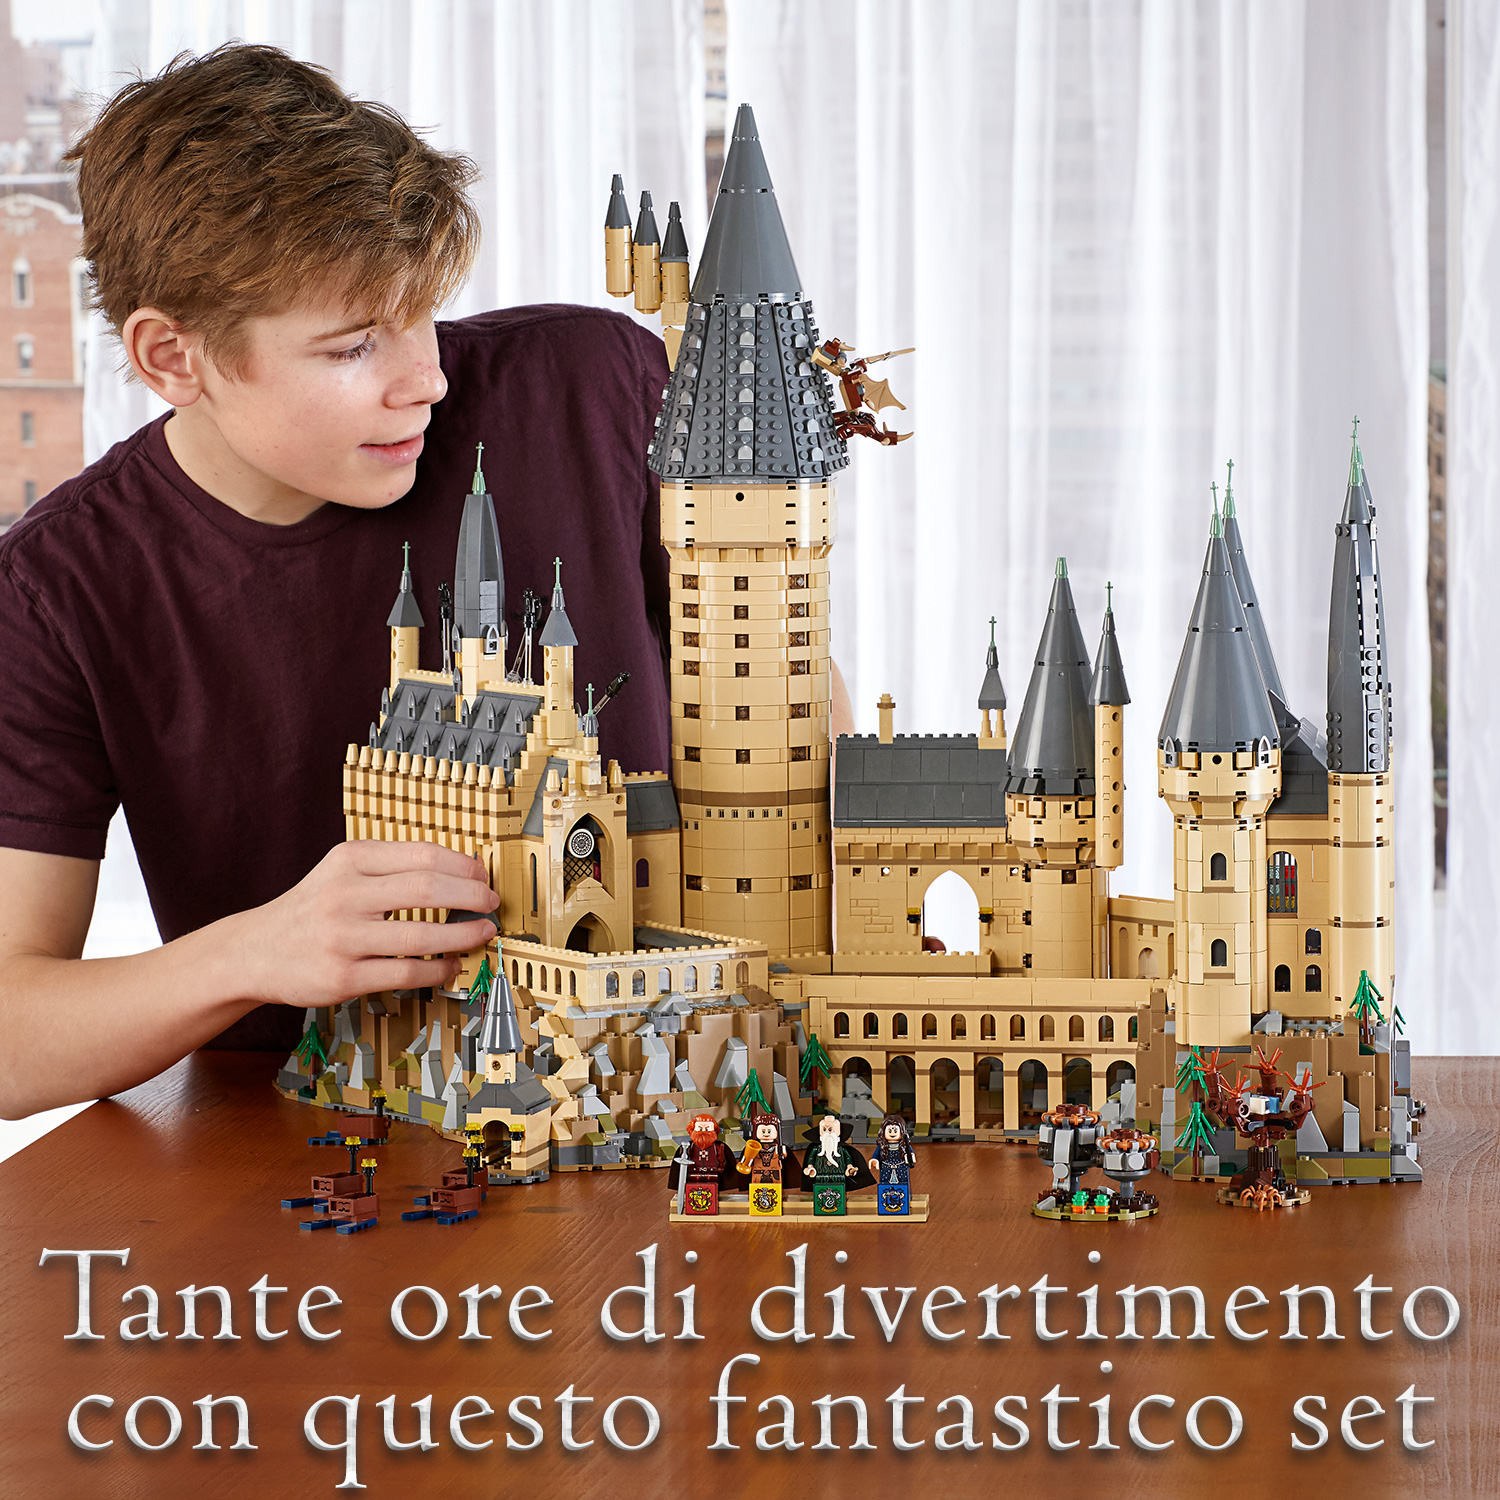 Kit di costruzione LEGO Harry Potter Castello di Hogwarts 71043 (6.020 pezzi) 71043, , large